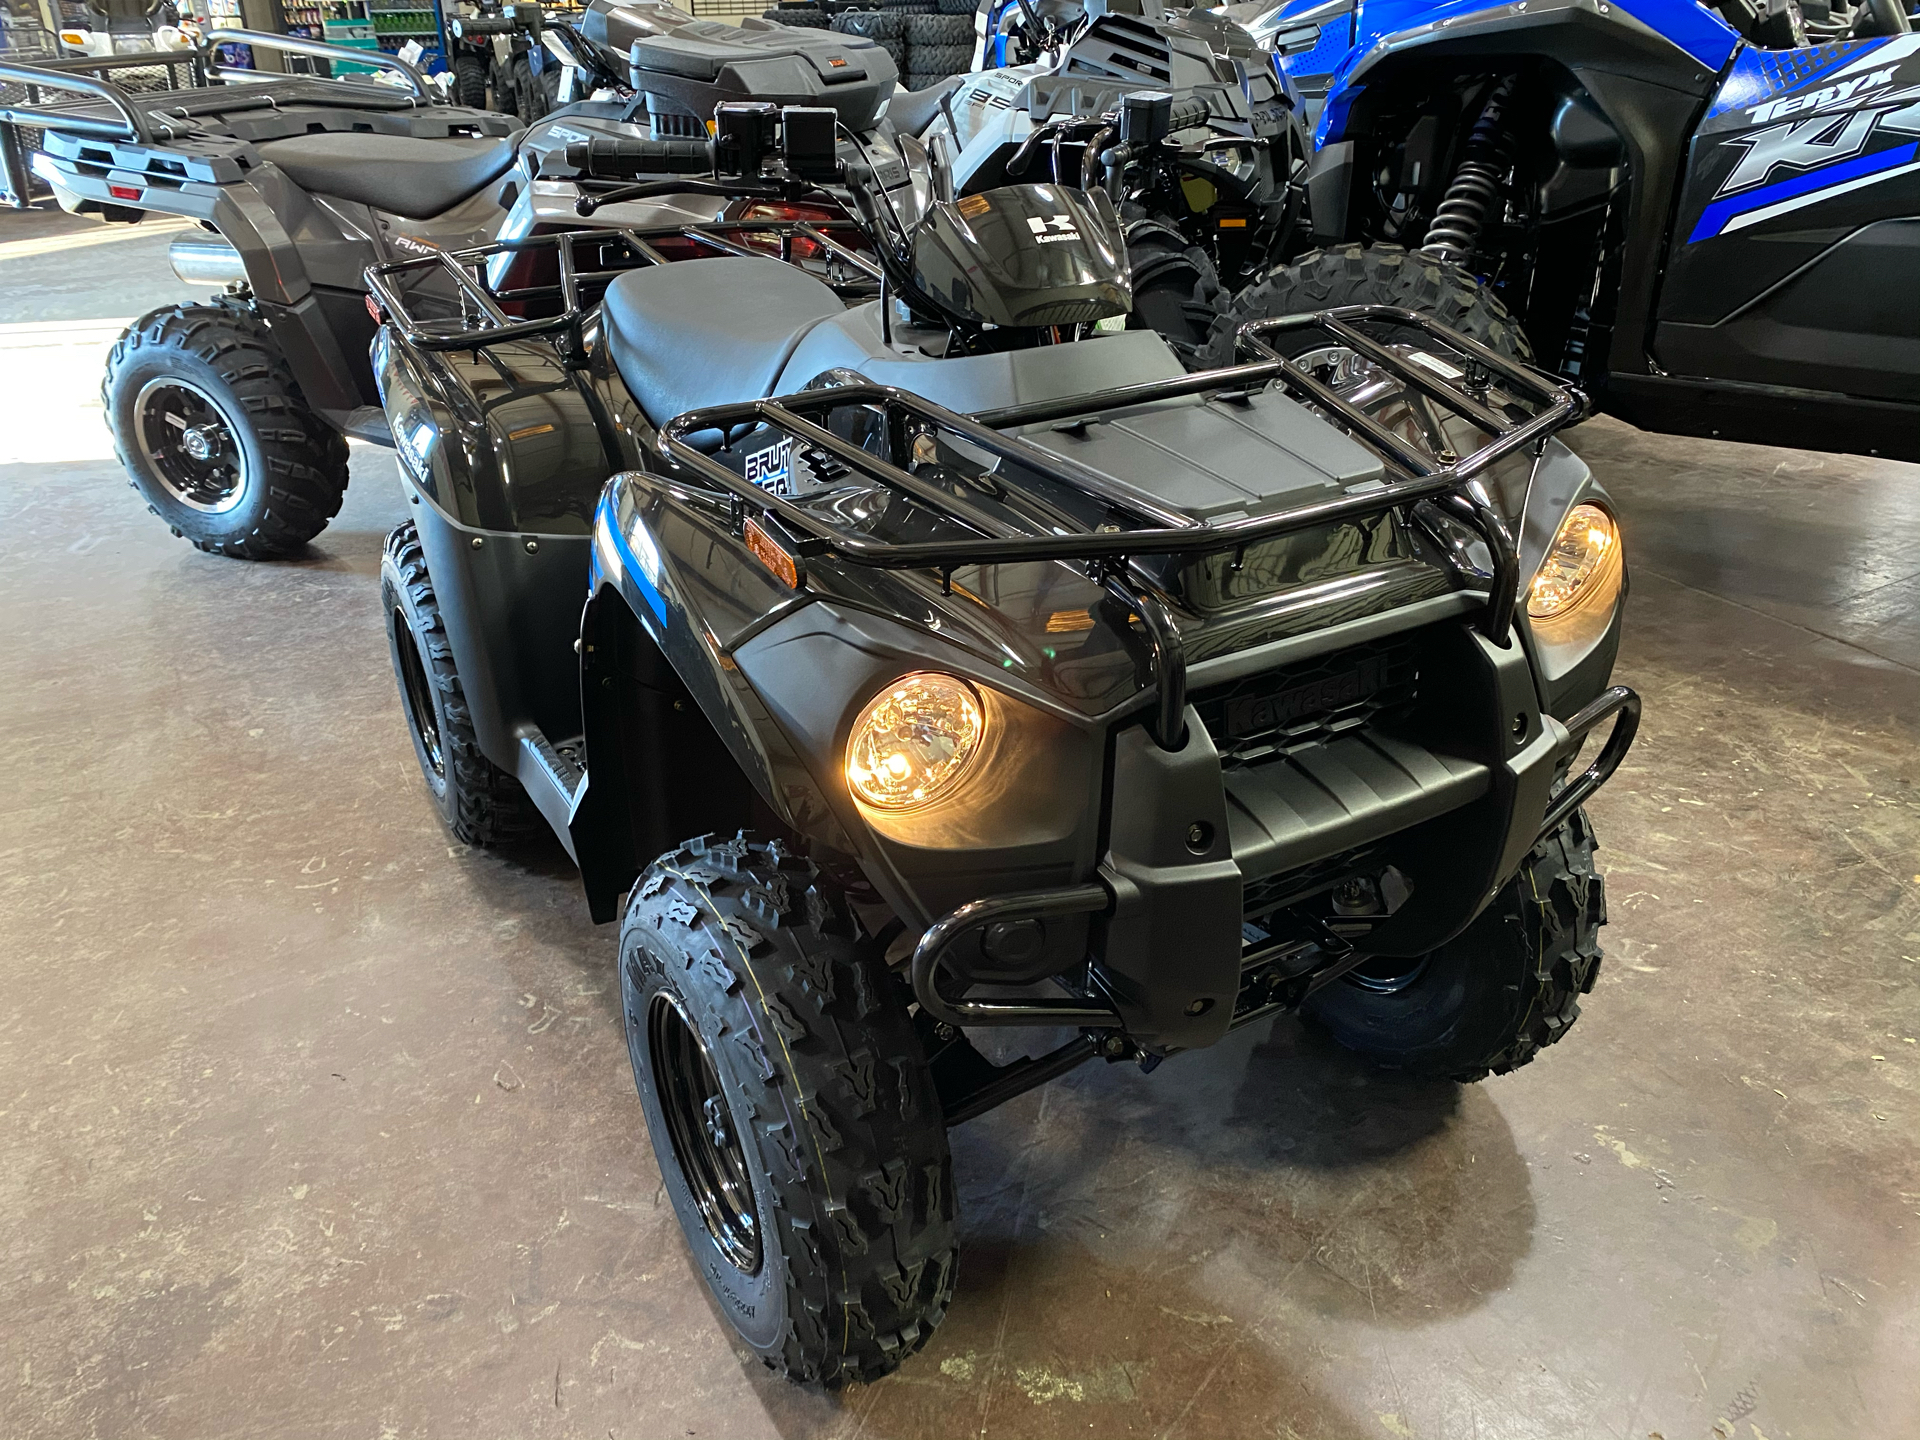 New 2021 Kawasaki Brute 300 ATVs in NC | Stock Number: E92345 -